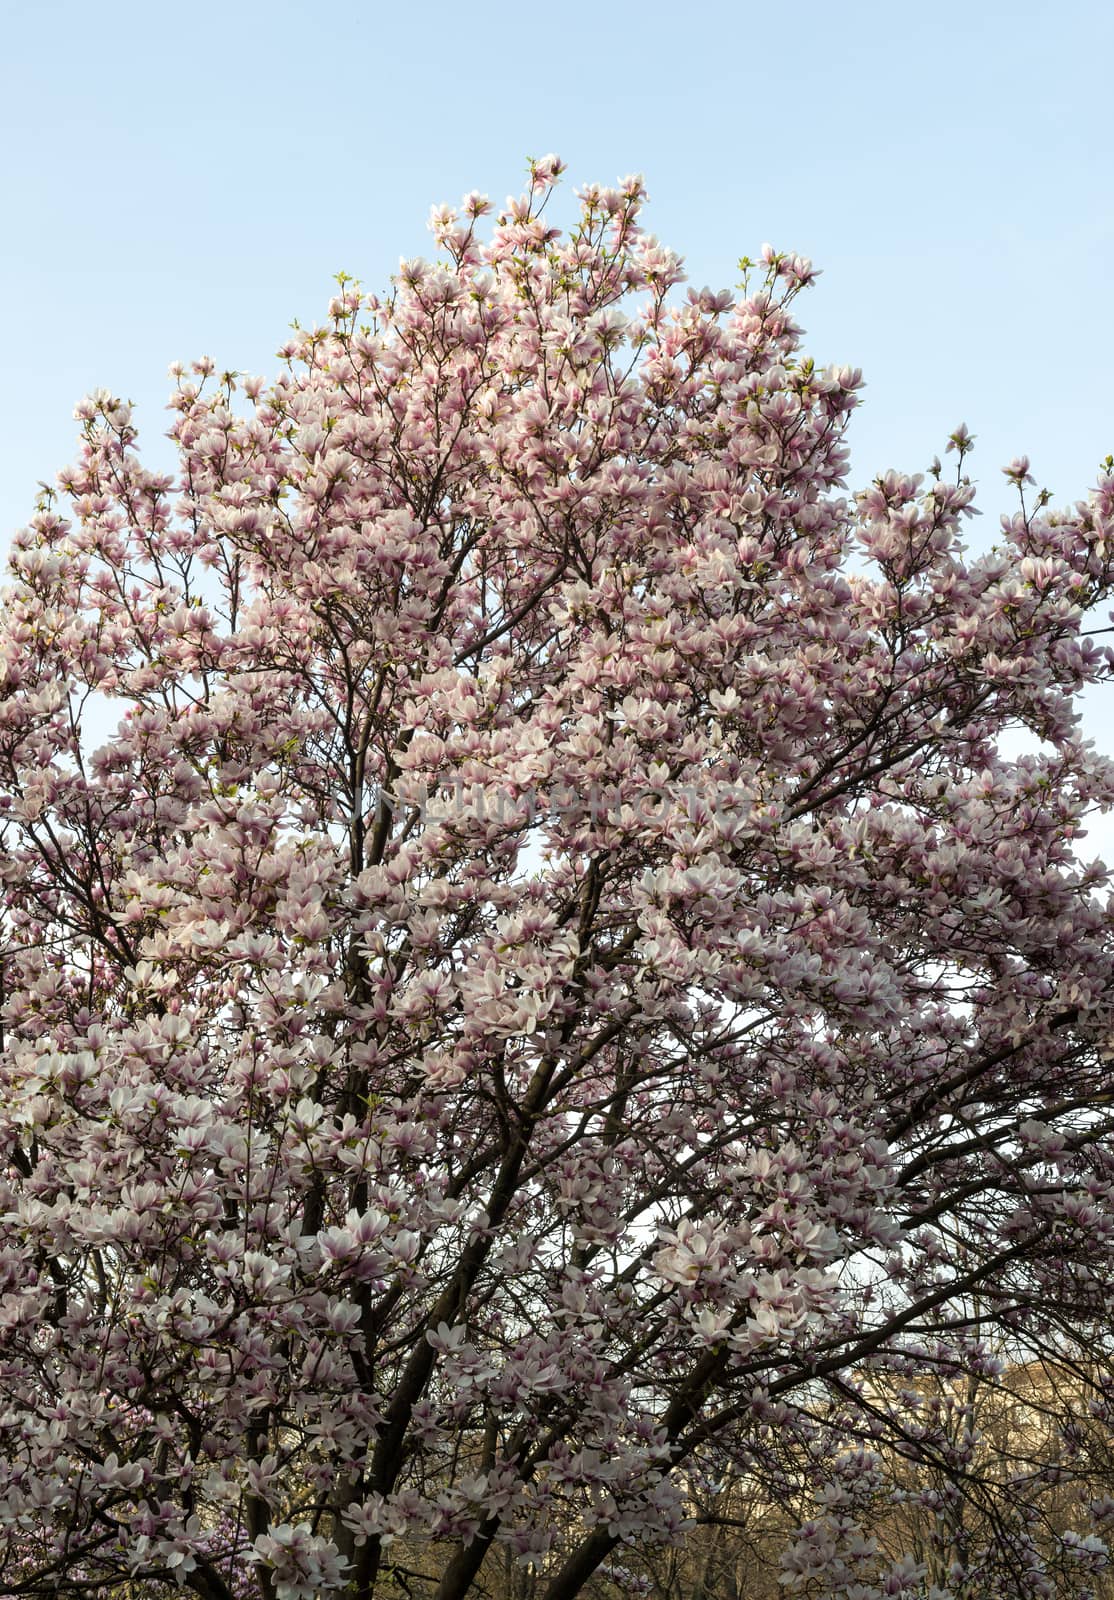 Magnolia blossom tree in spring